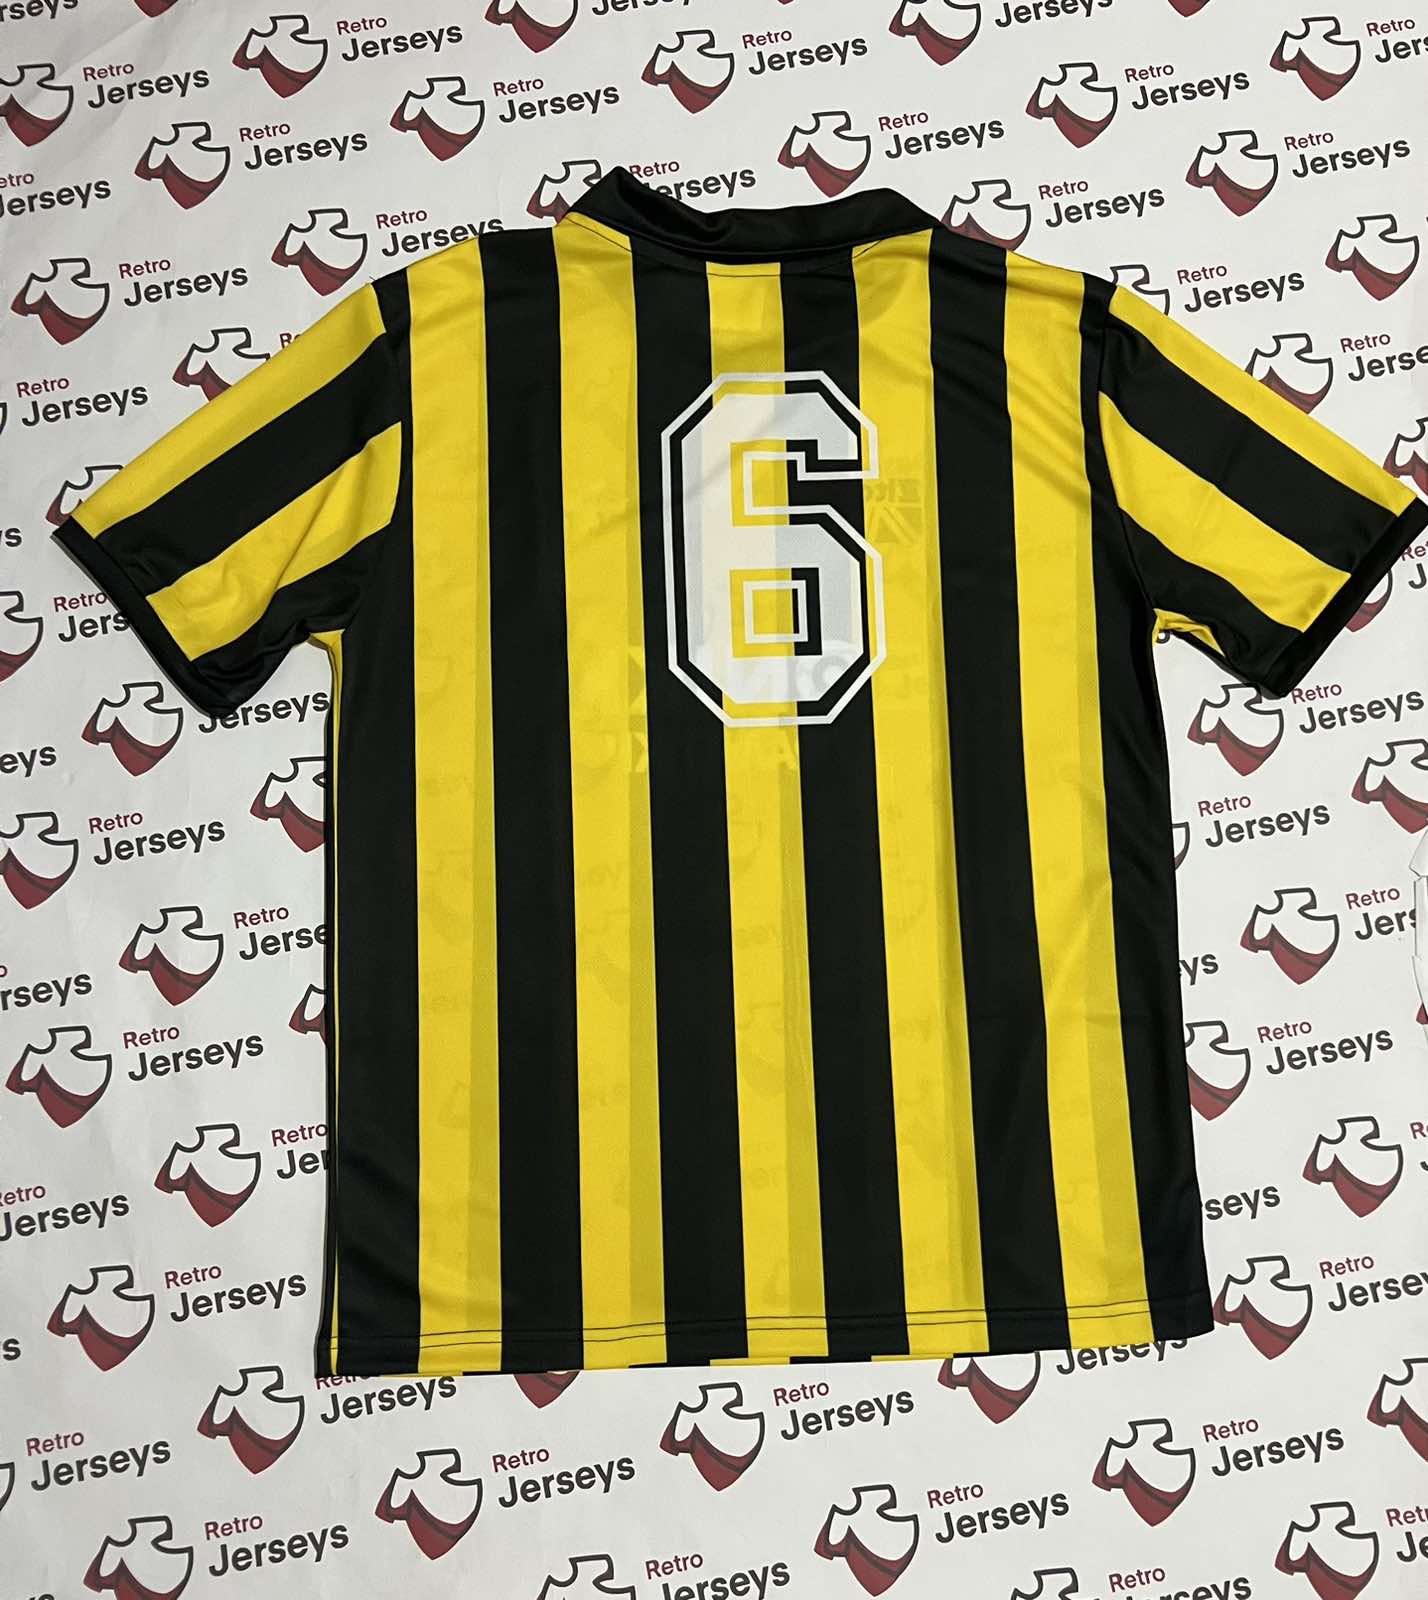 AEK Athens Shirt 1988-1989 Final Game - Retro Jerseys, φανέλα αεκ - Retro Jerseys